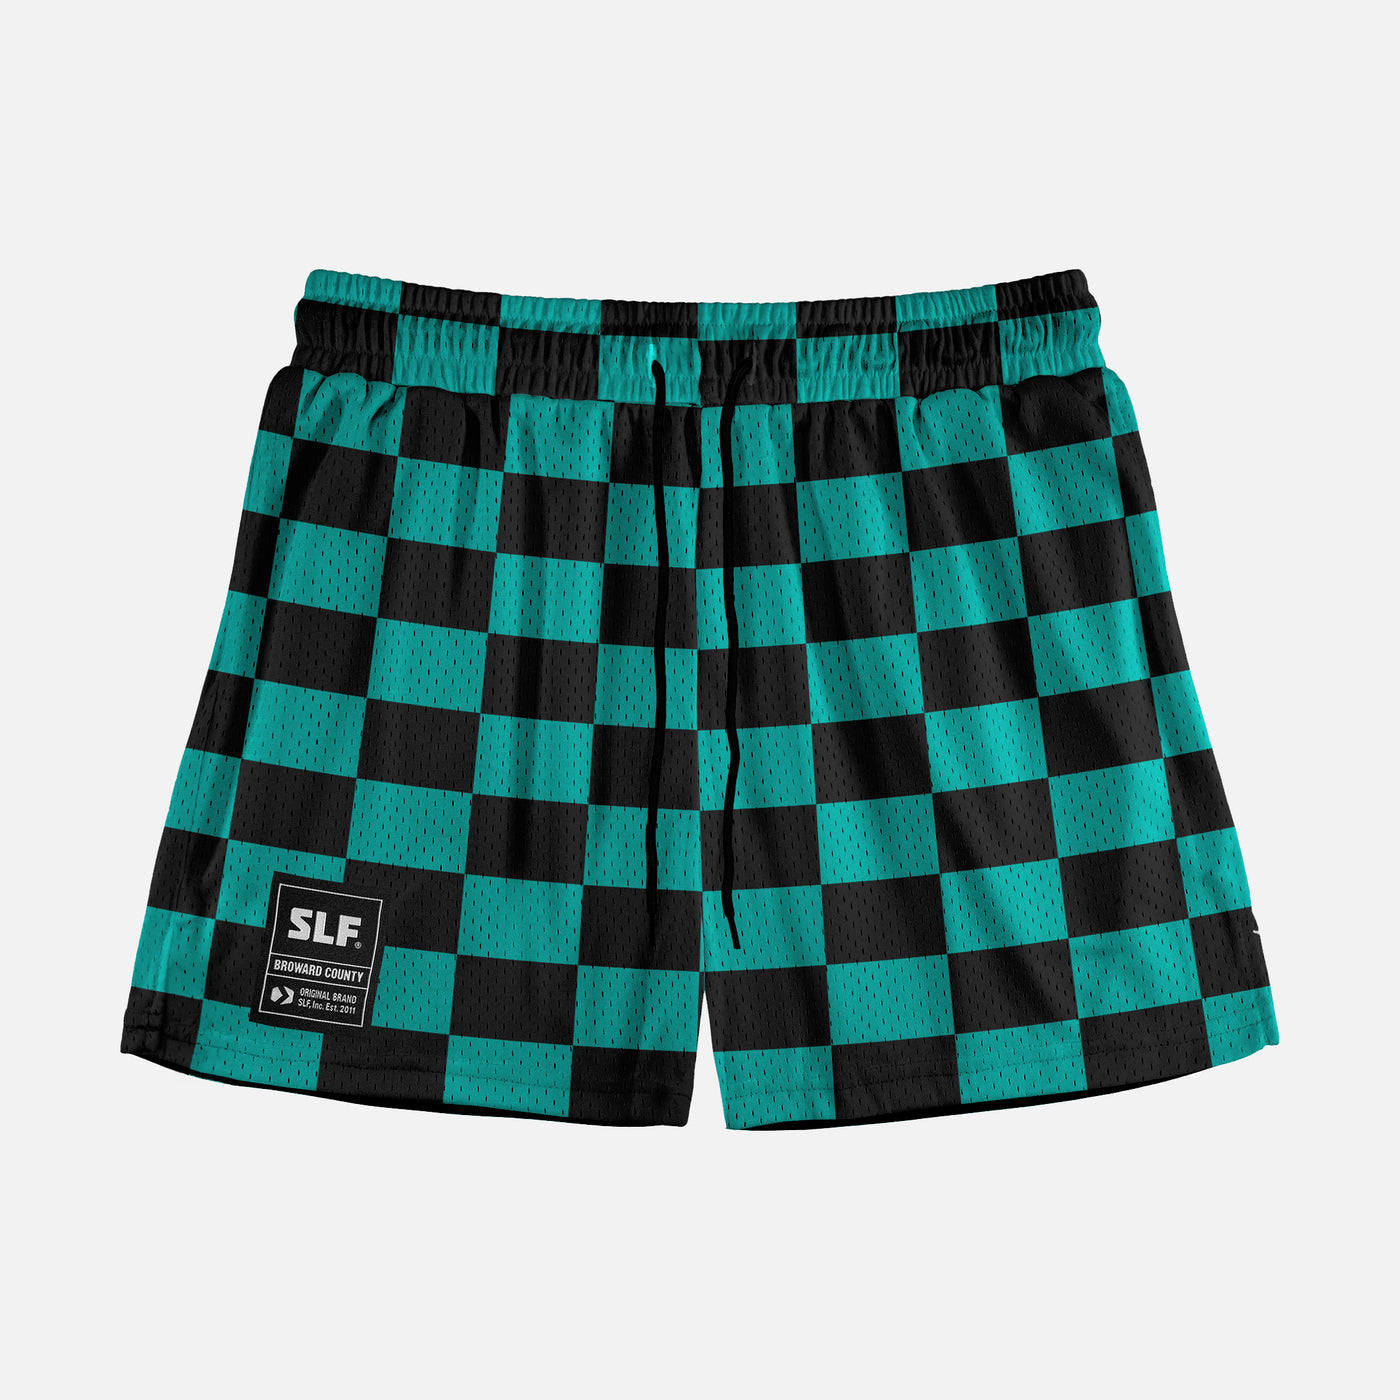 Checkered Teal Black White Shorts - 5"